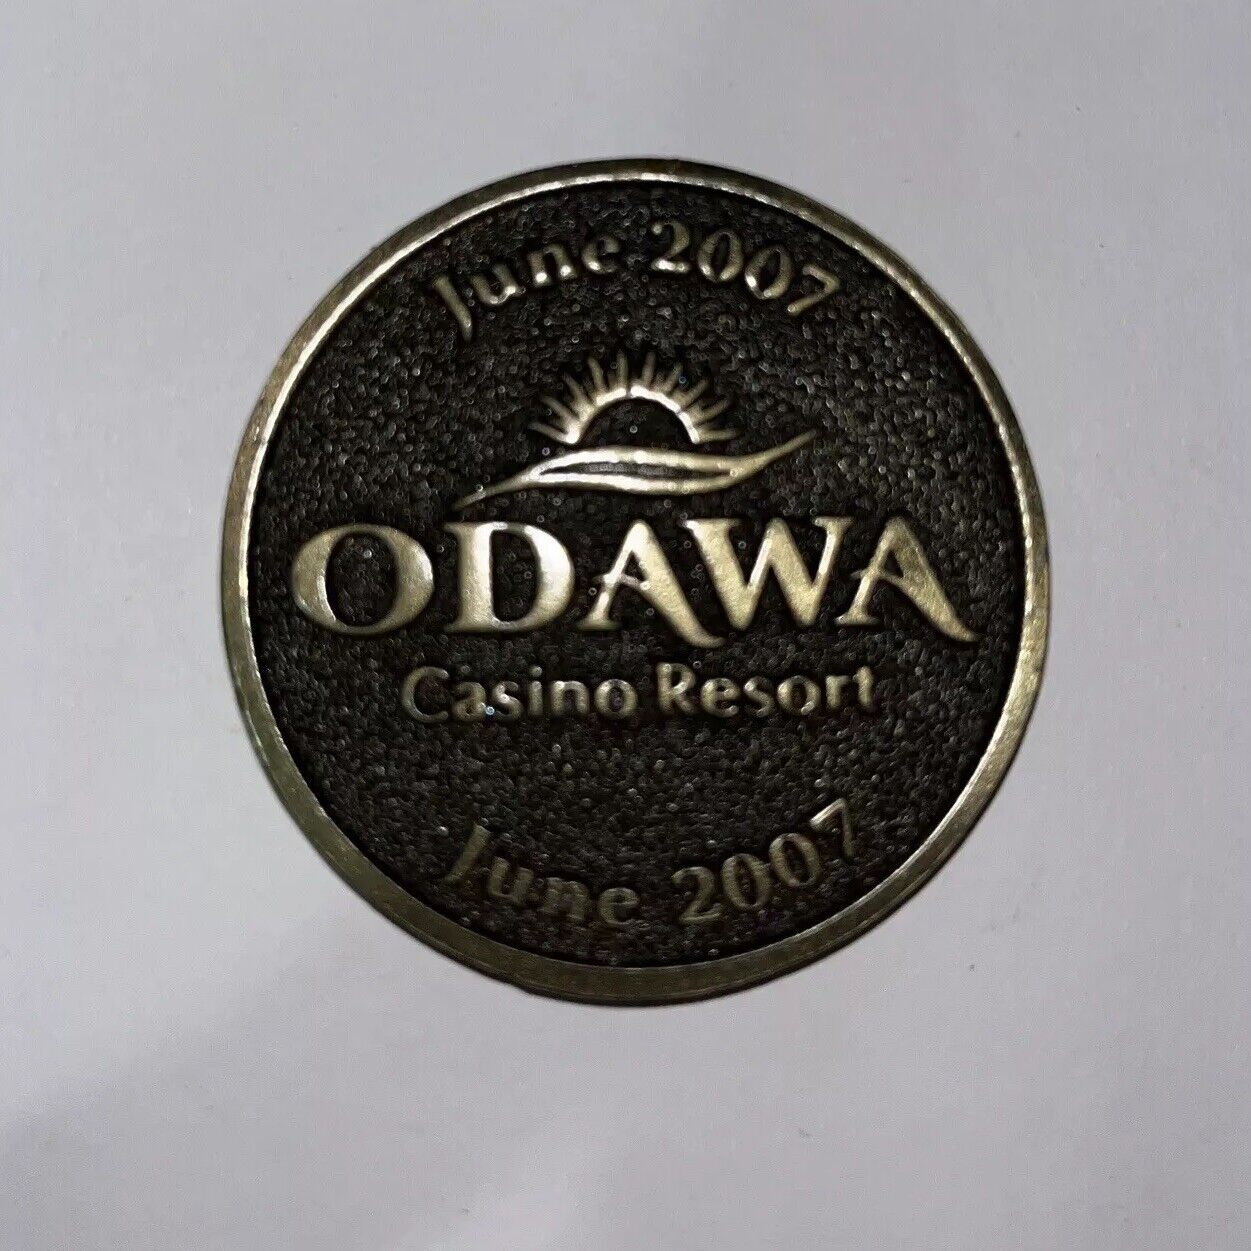 June 2007 Odawa Casino Resort Michigan Collector’s Coin - Double Sides - RARE